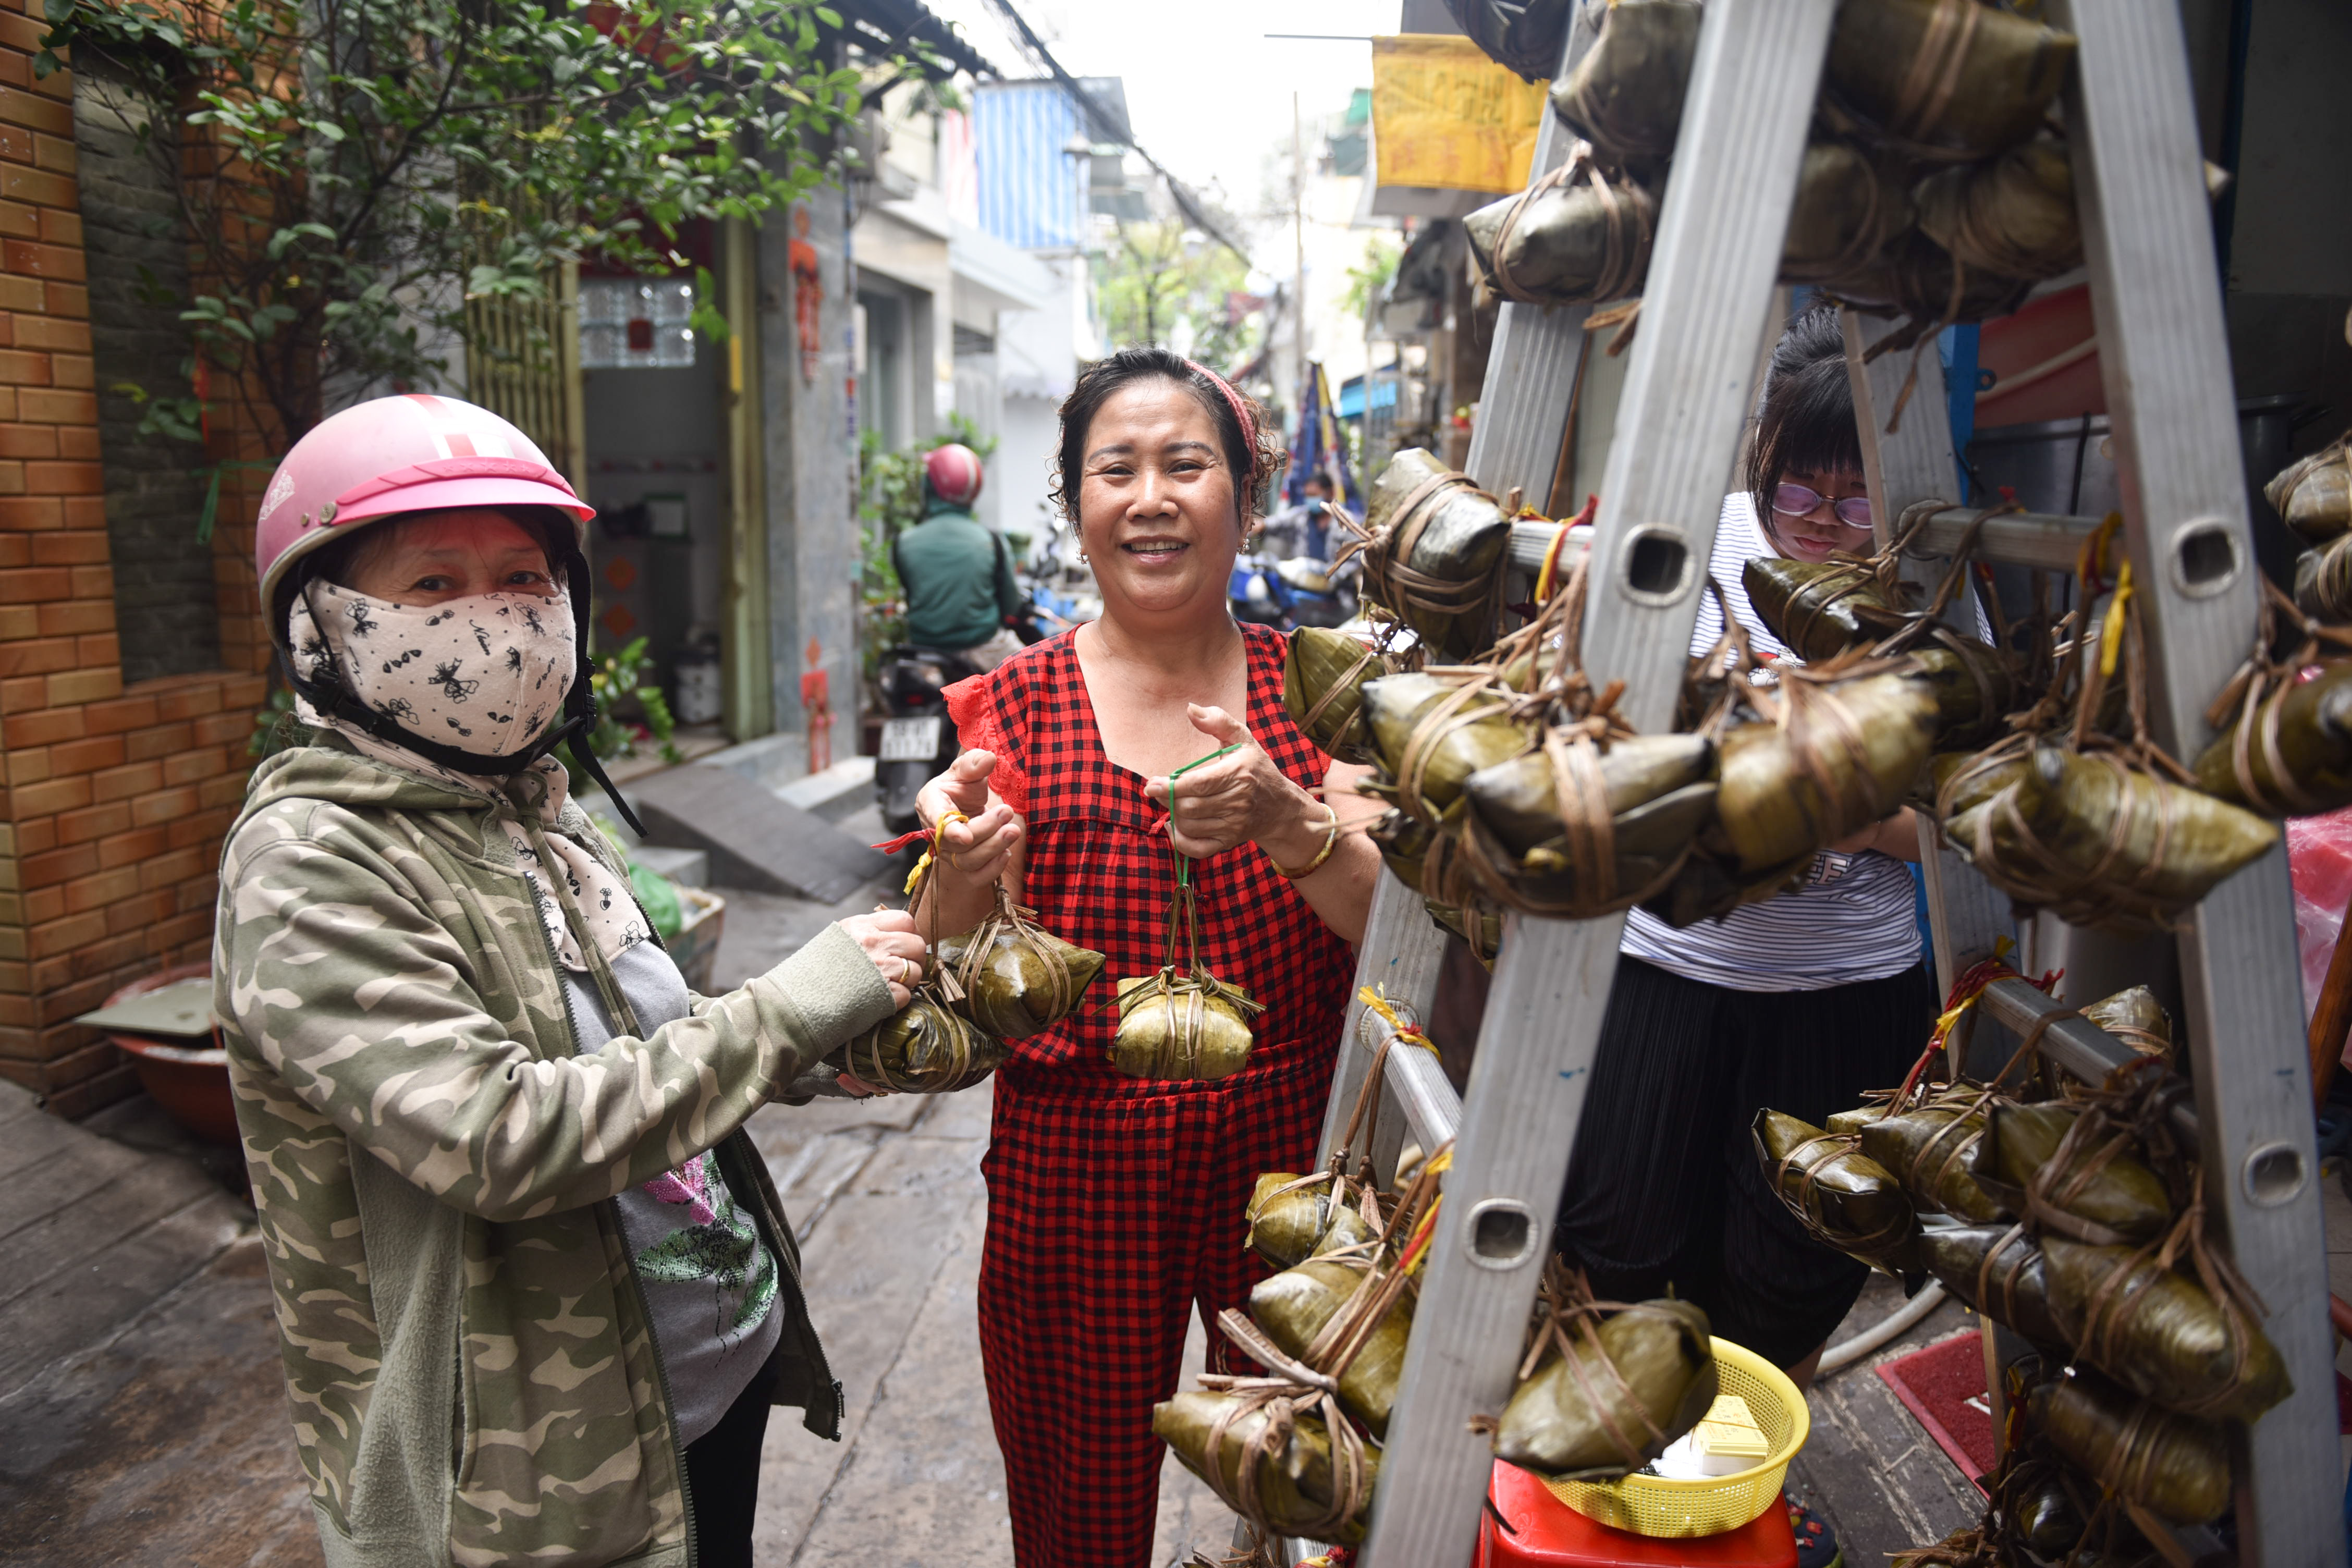 Tran Cam Thao sells zongzi at An Ky Banh Chung in District 11, Ho Chi Minh City. Photo: Ngoc Phuong / Tuoi Tre